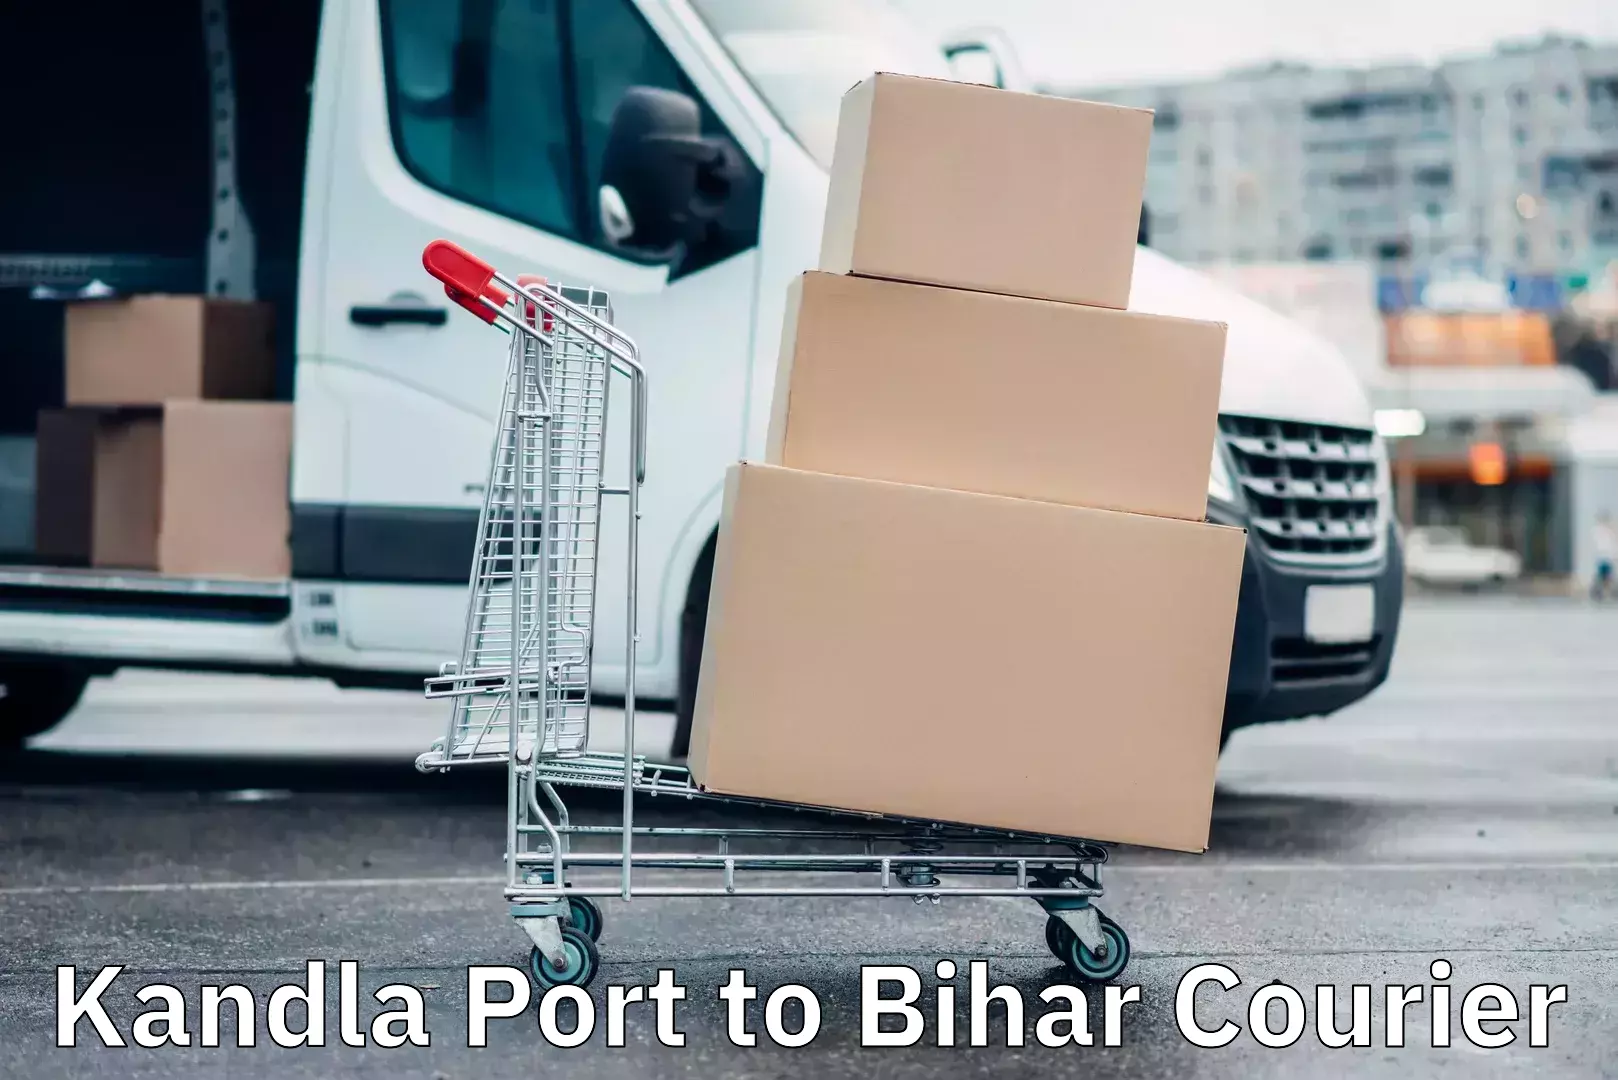 International courier networks Kandla Port to Bihar